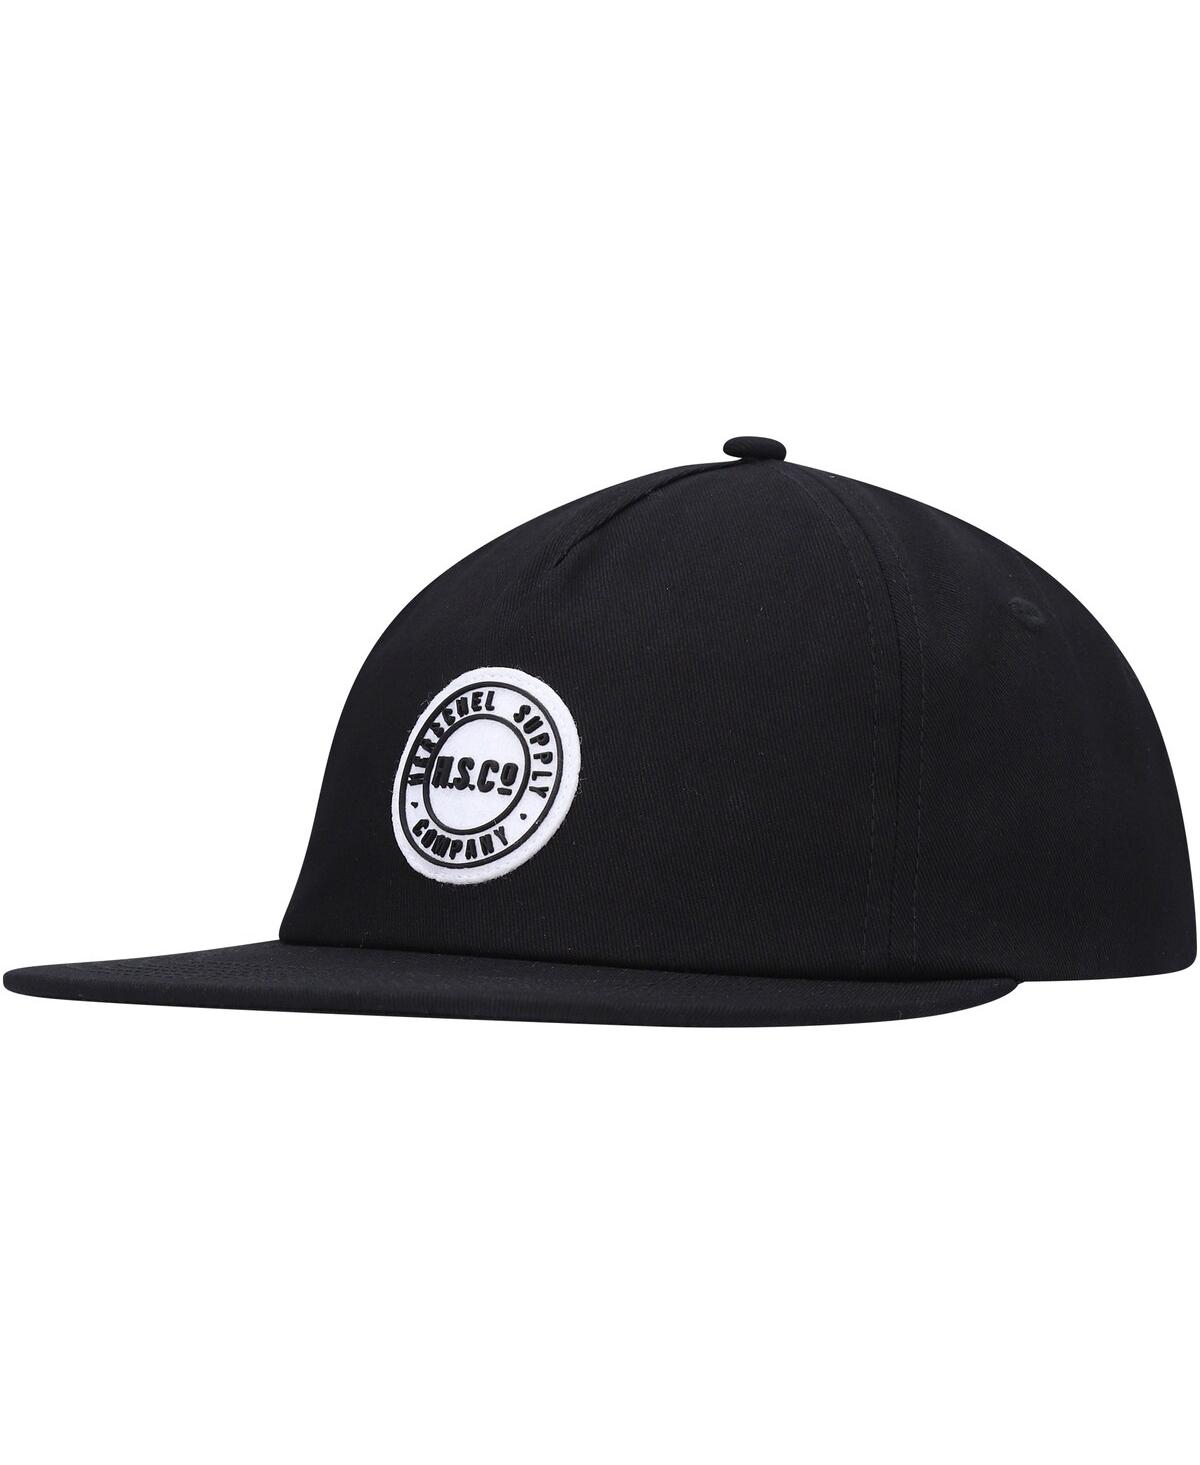 Men's Herschel Supply Co. Black Scout Adjustable Hat - Black